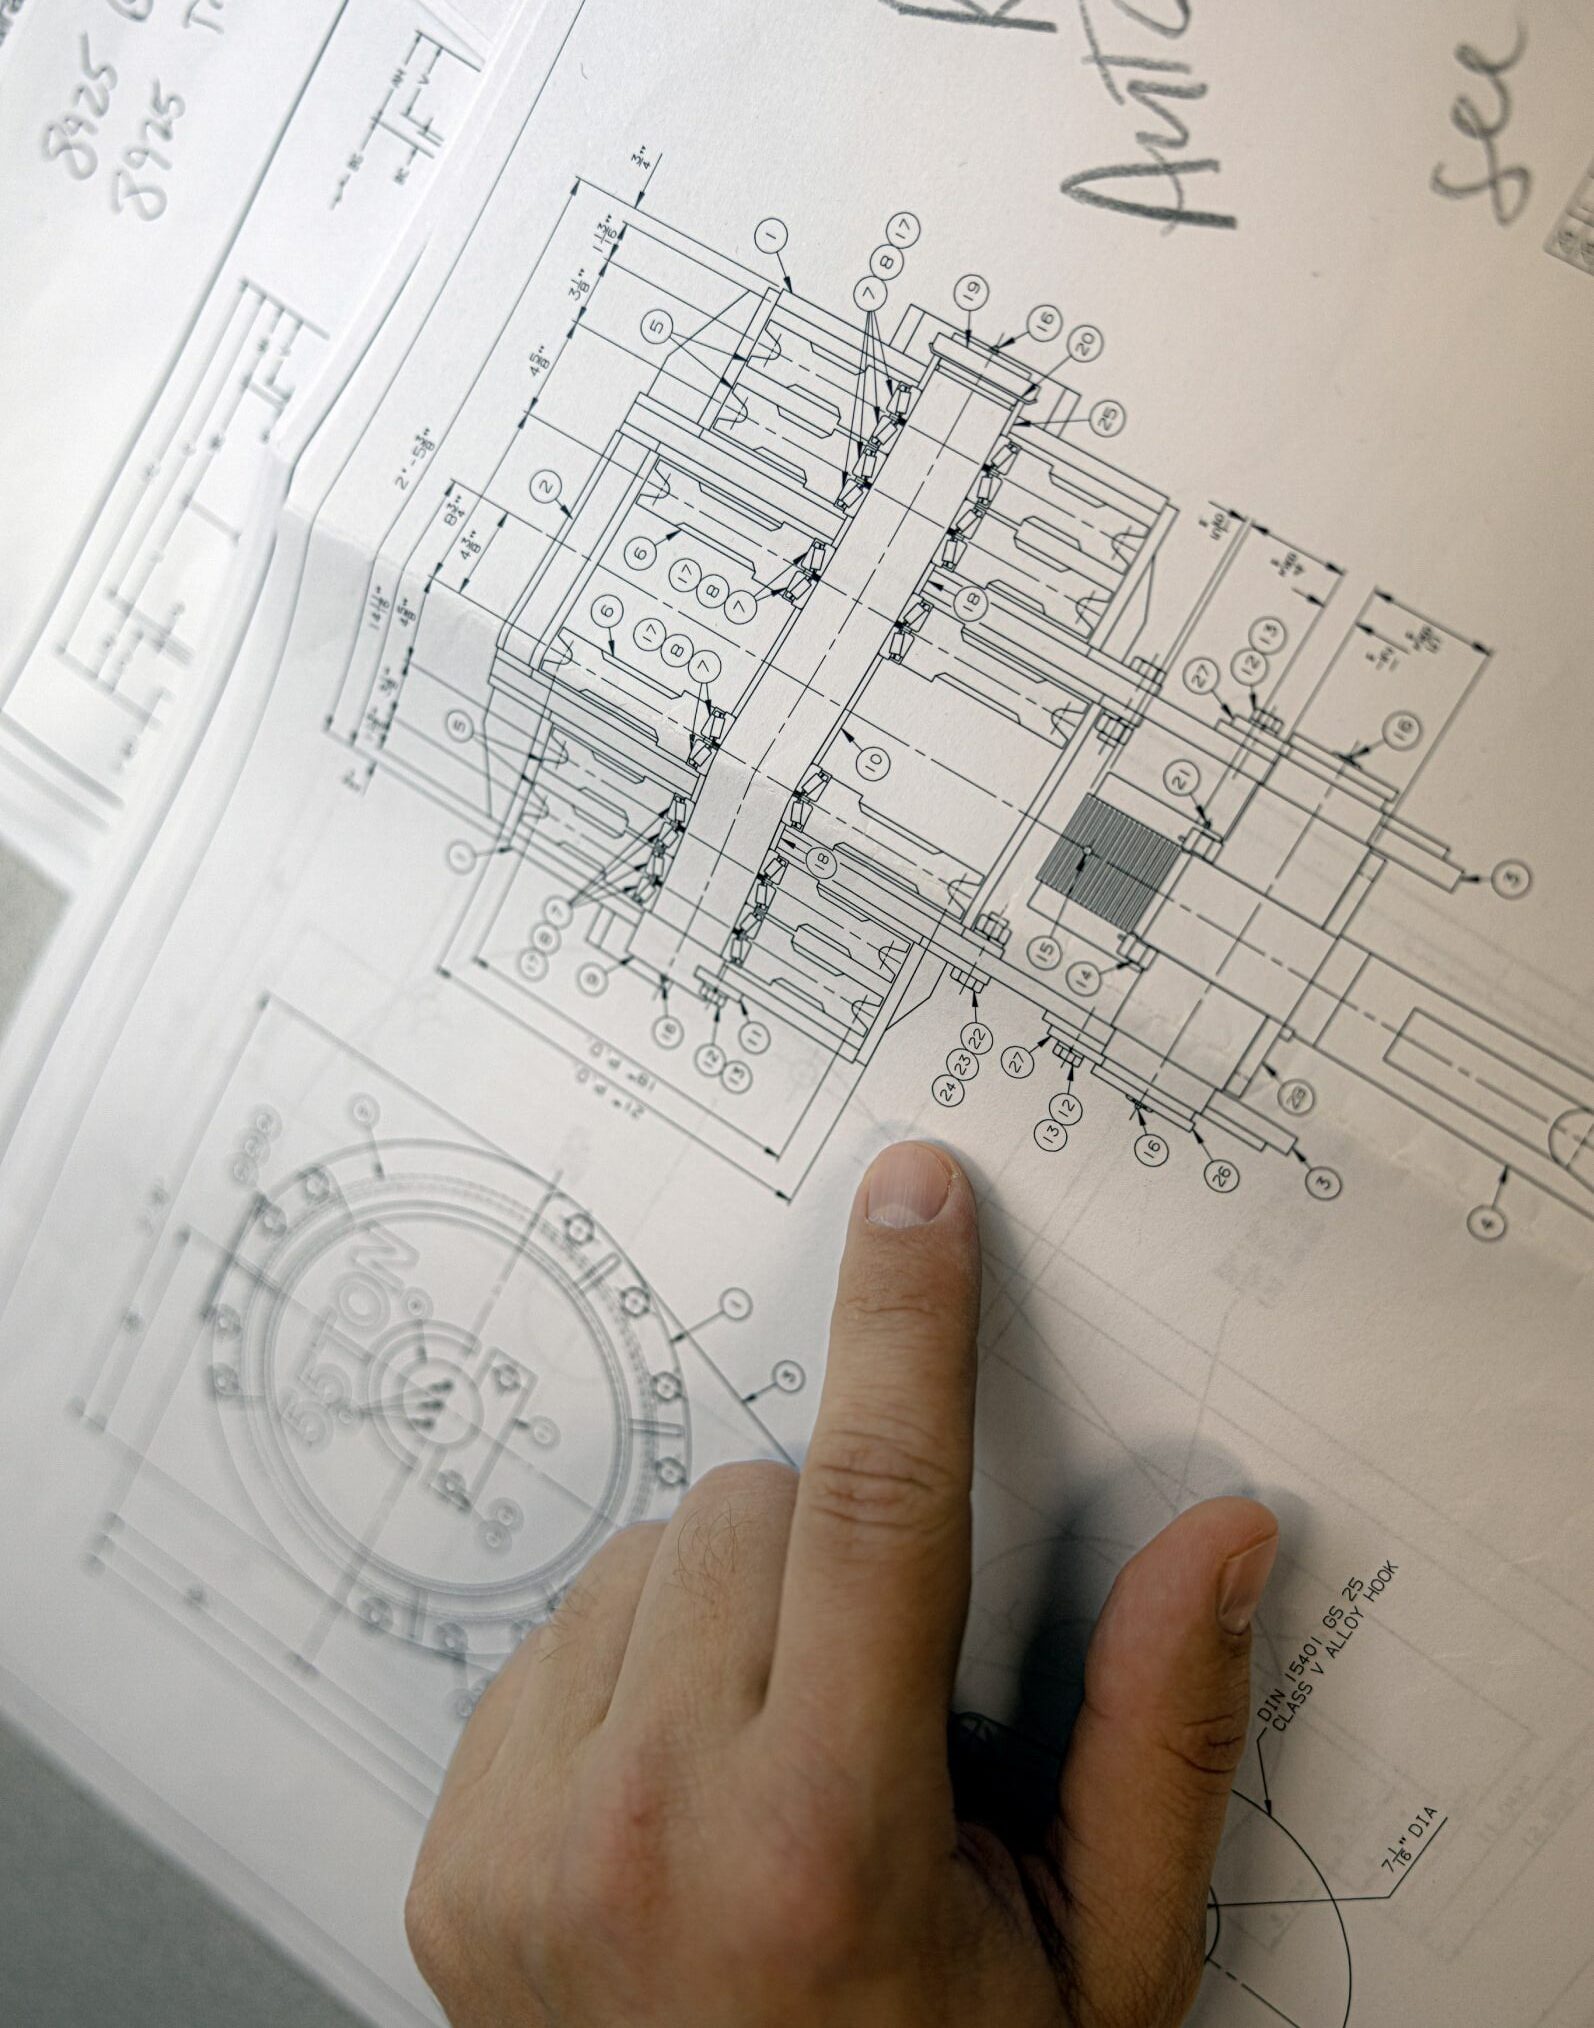 Engineer examining a Zenar carne blueprint or schematic